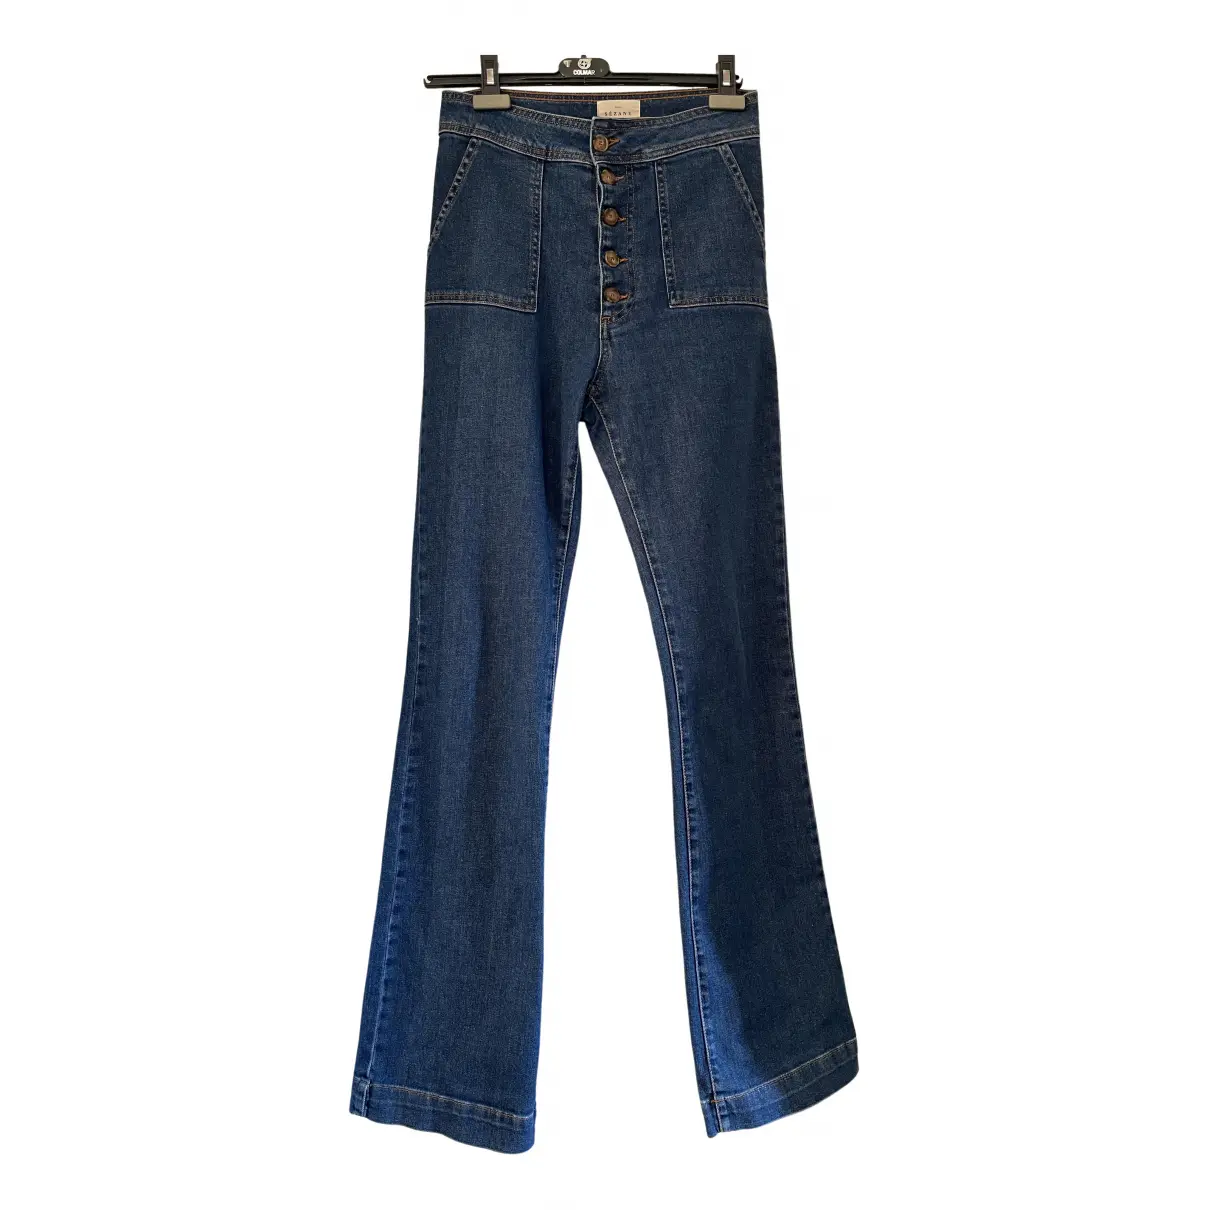 Blue Cotton - elasthane Jeans Fall Winter 2020 Sézane